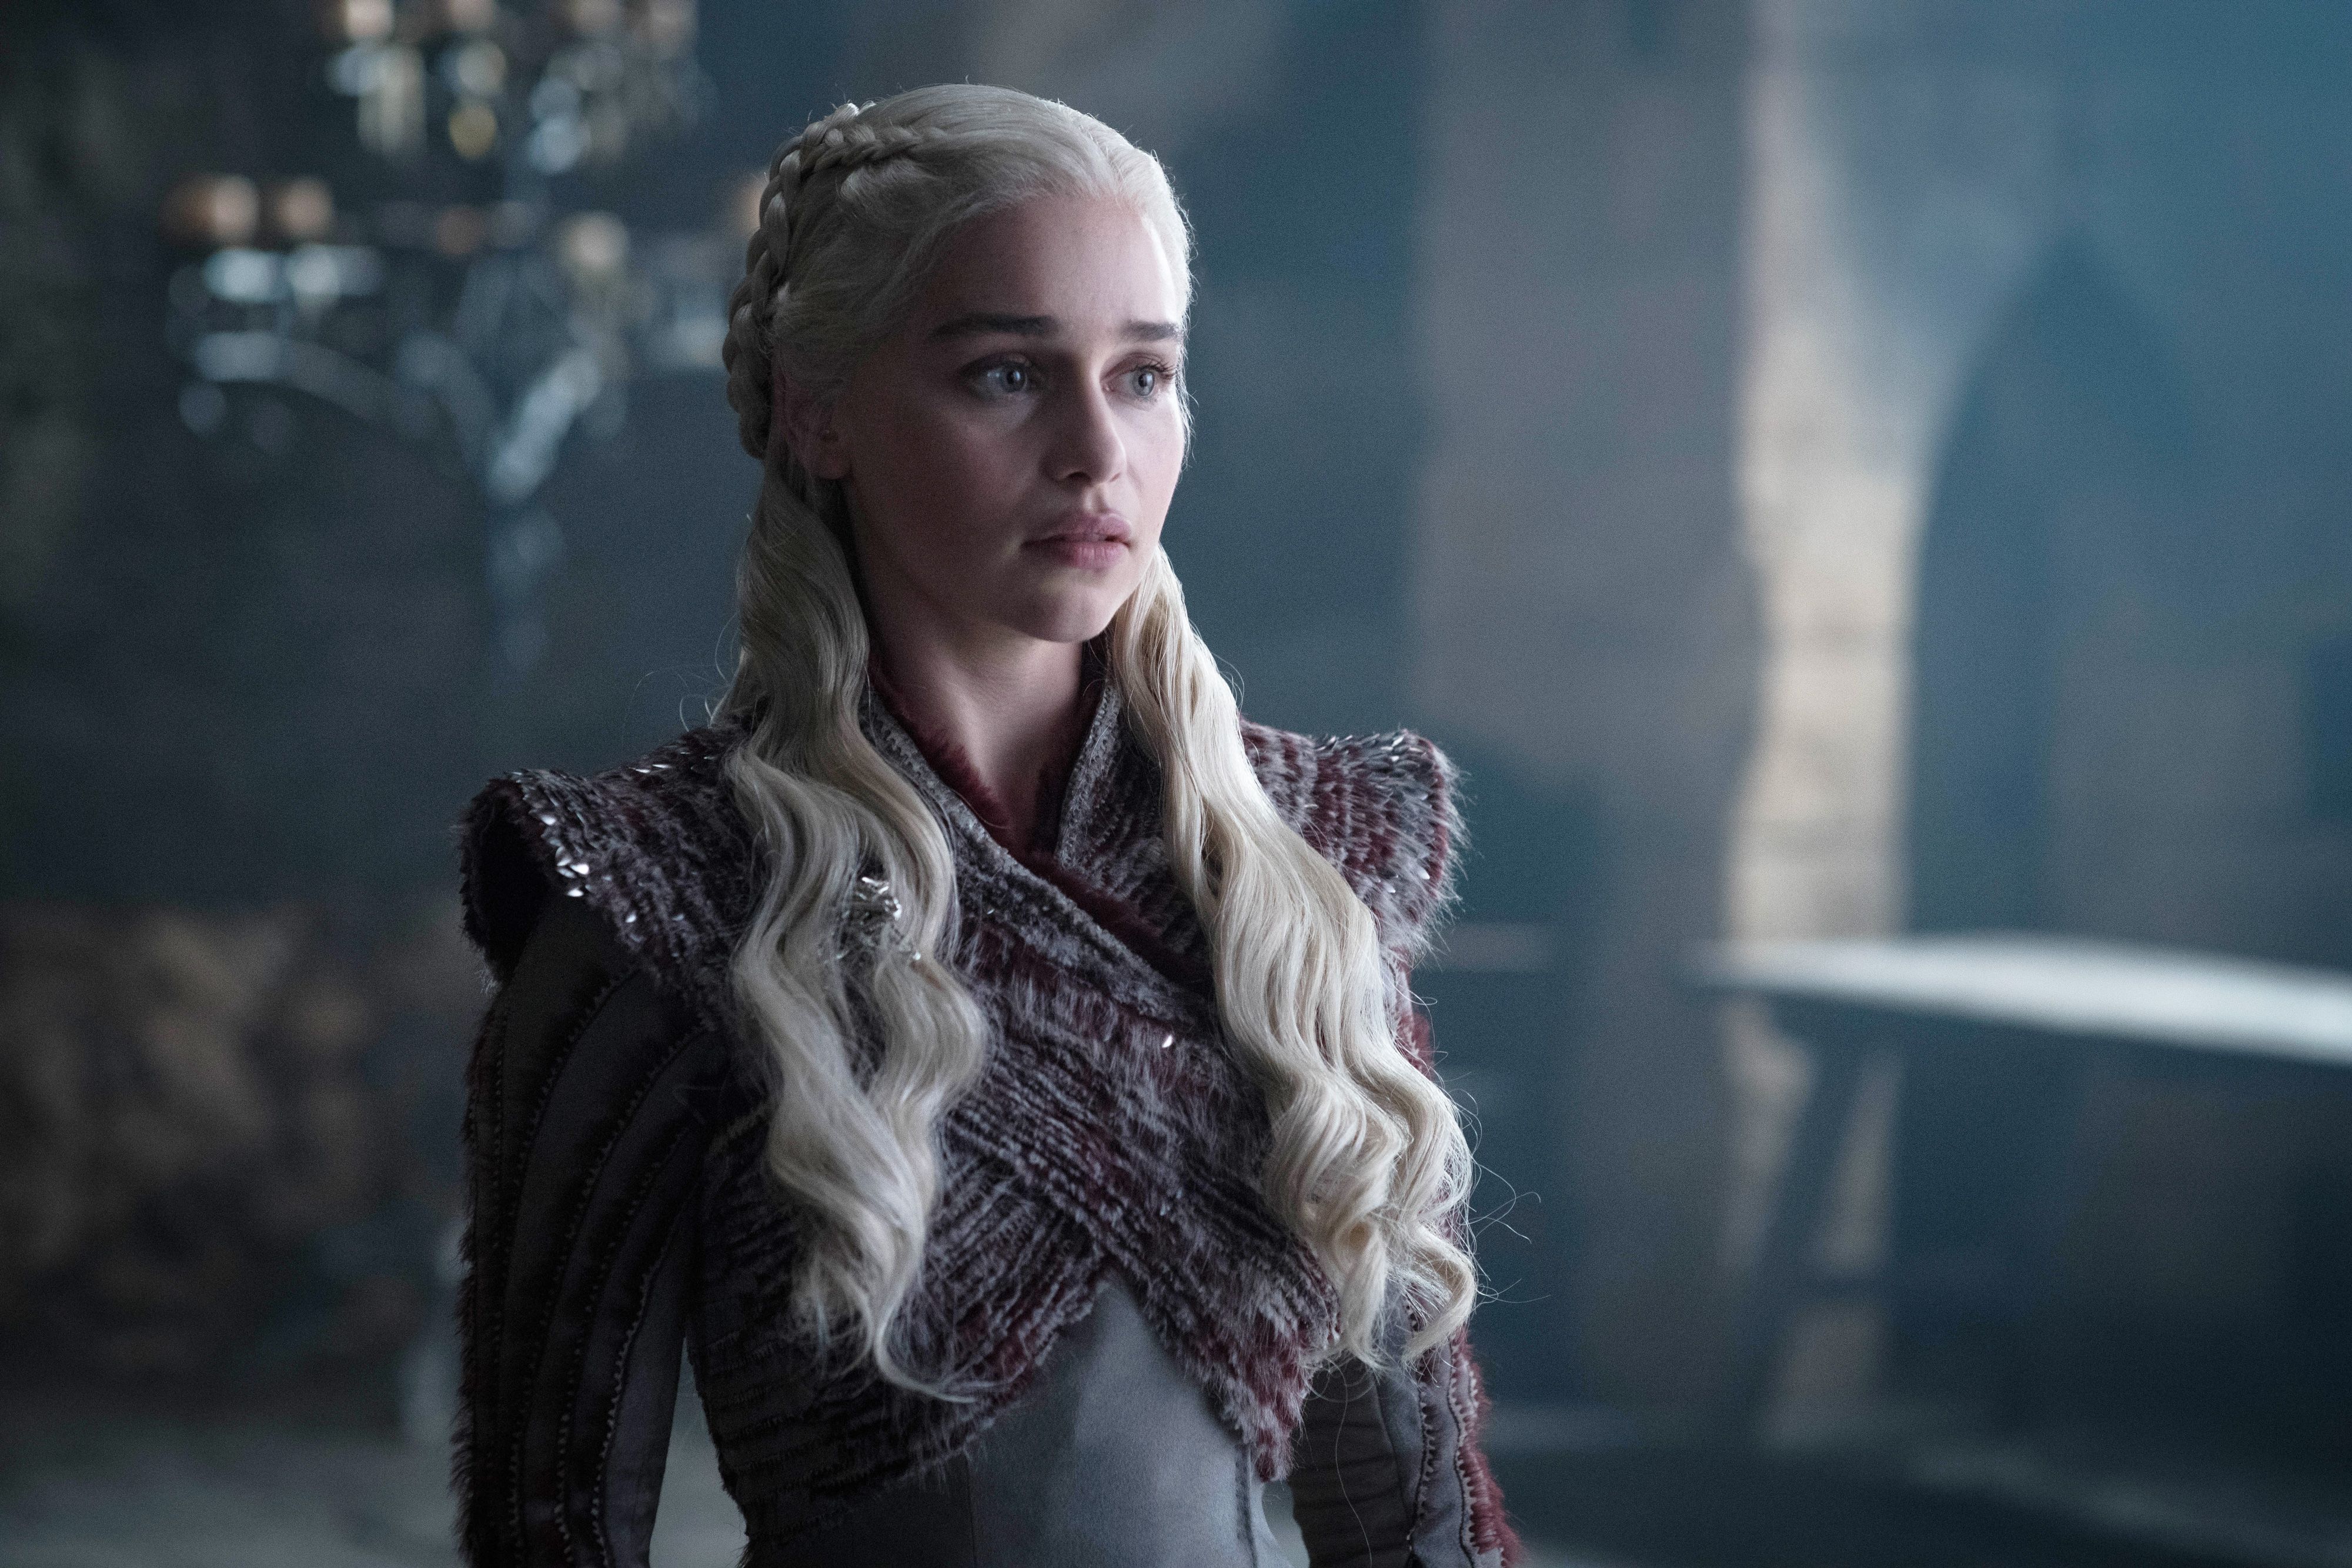 Emilia Clarke Is Already Saying “Goodbye” to Game of Thrones